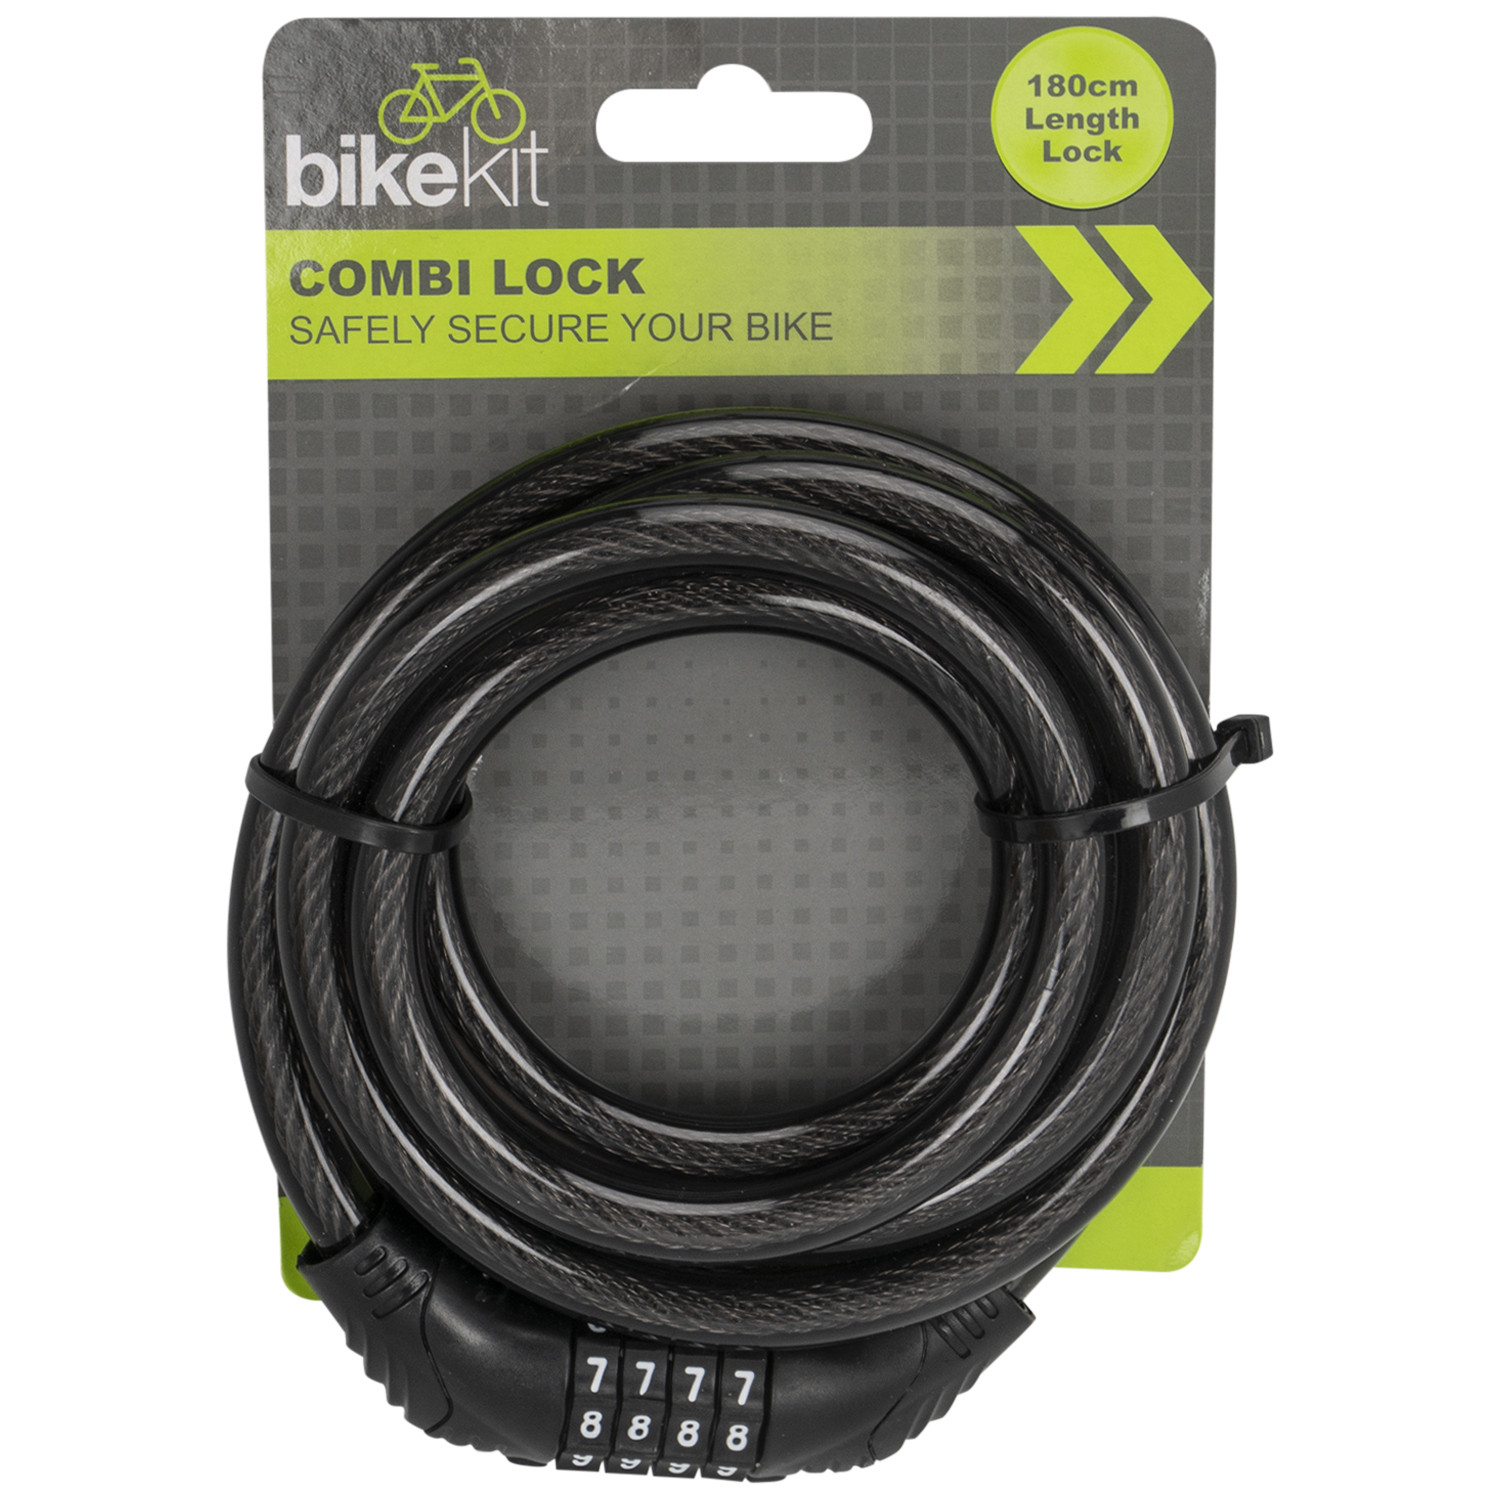 Bike Kit Combi Lock - 180cm Image